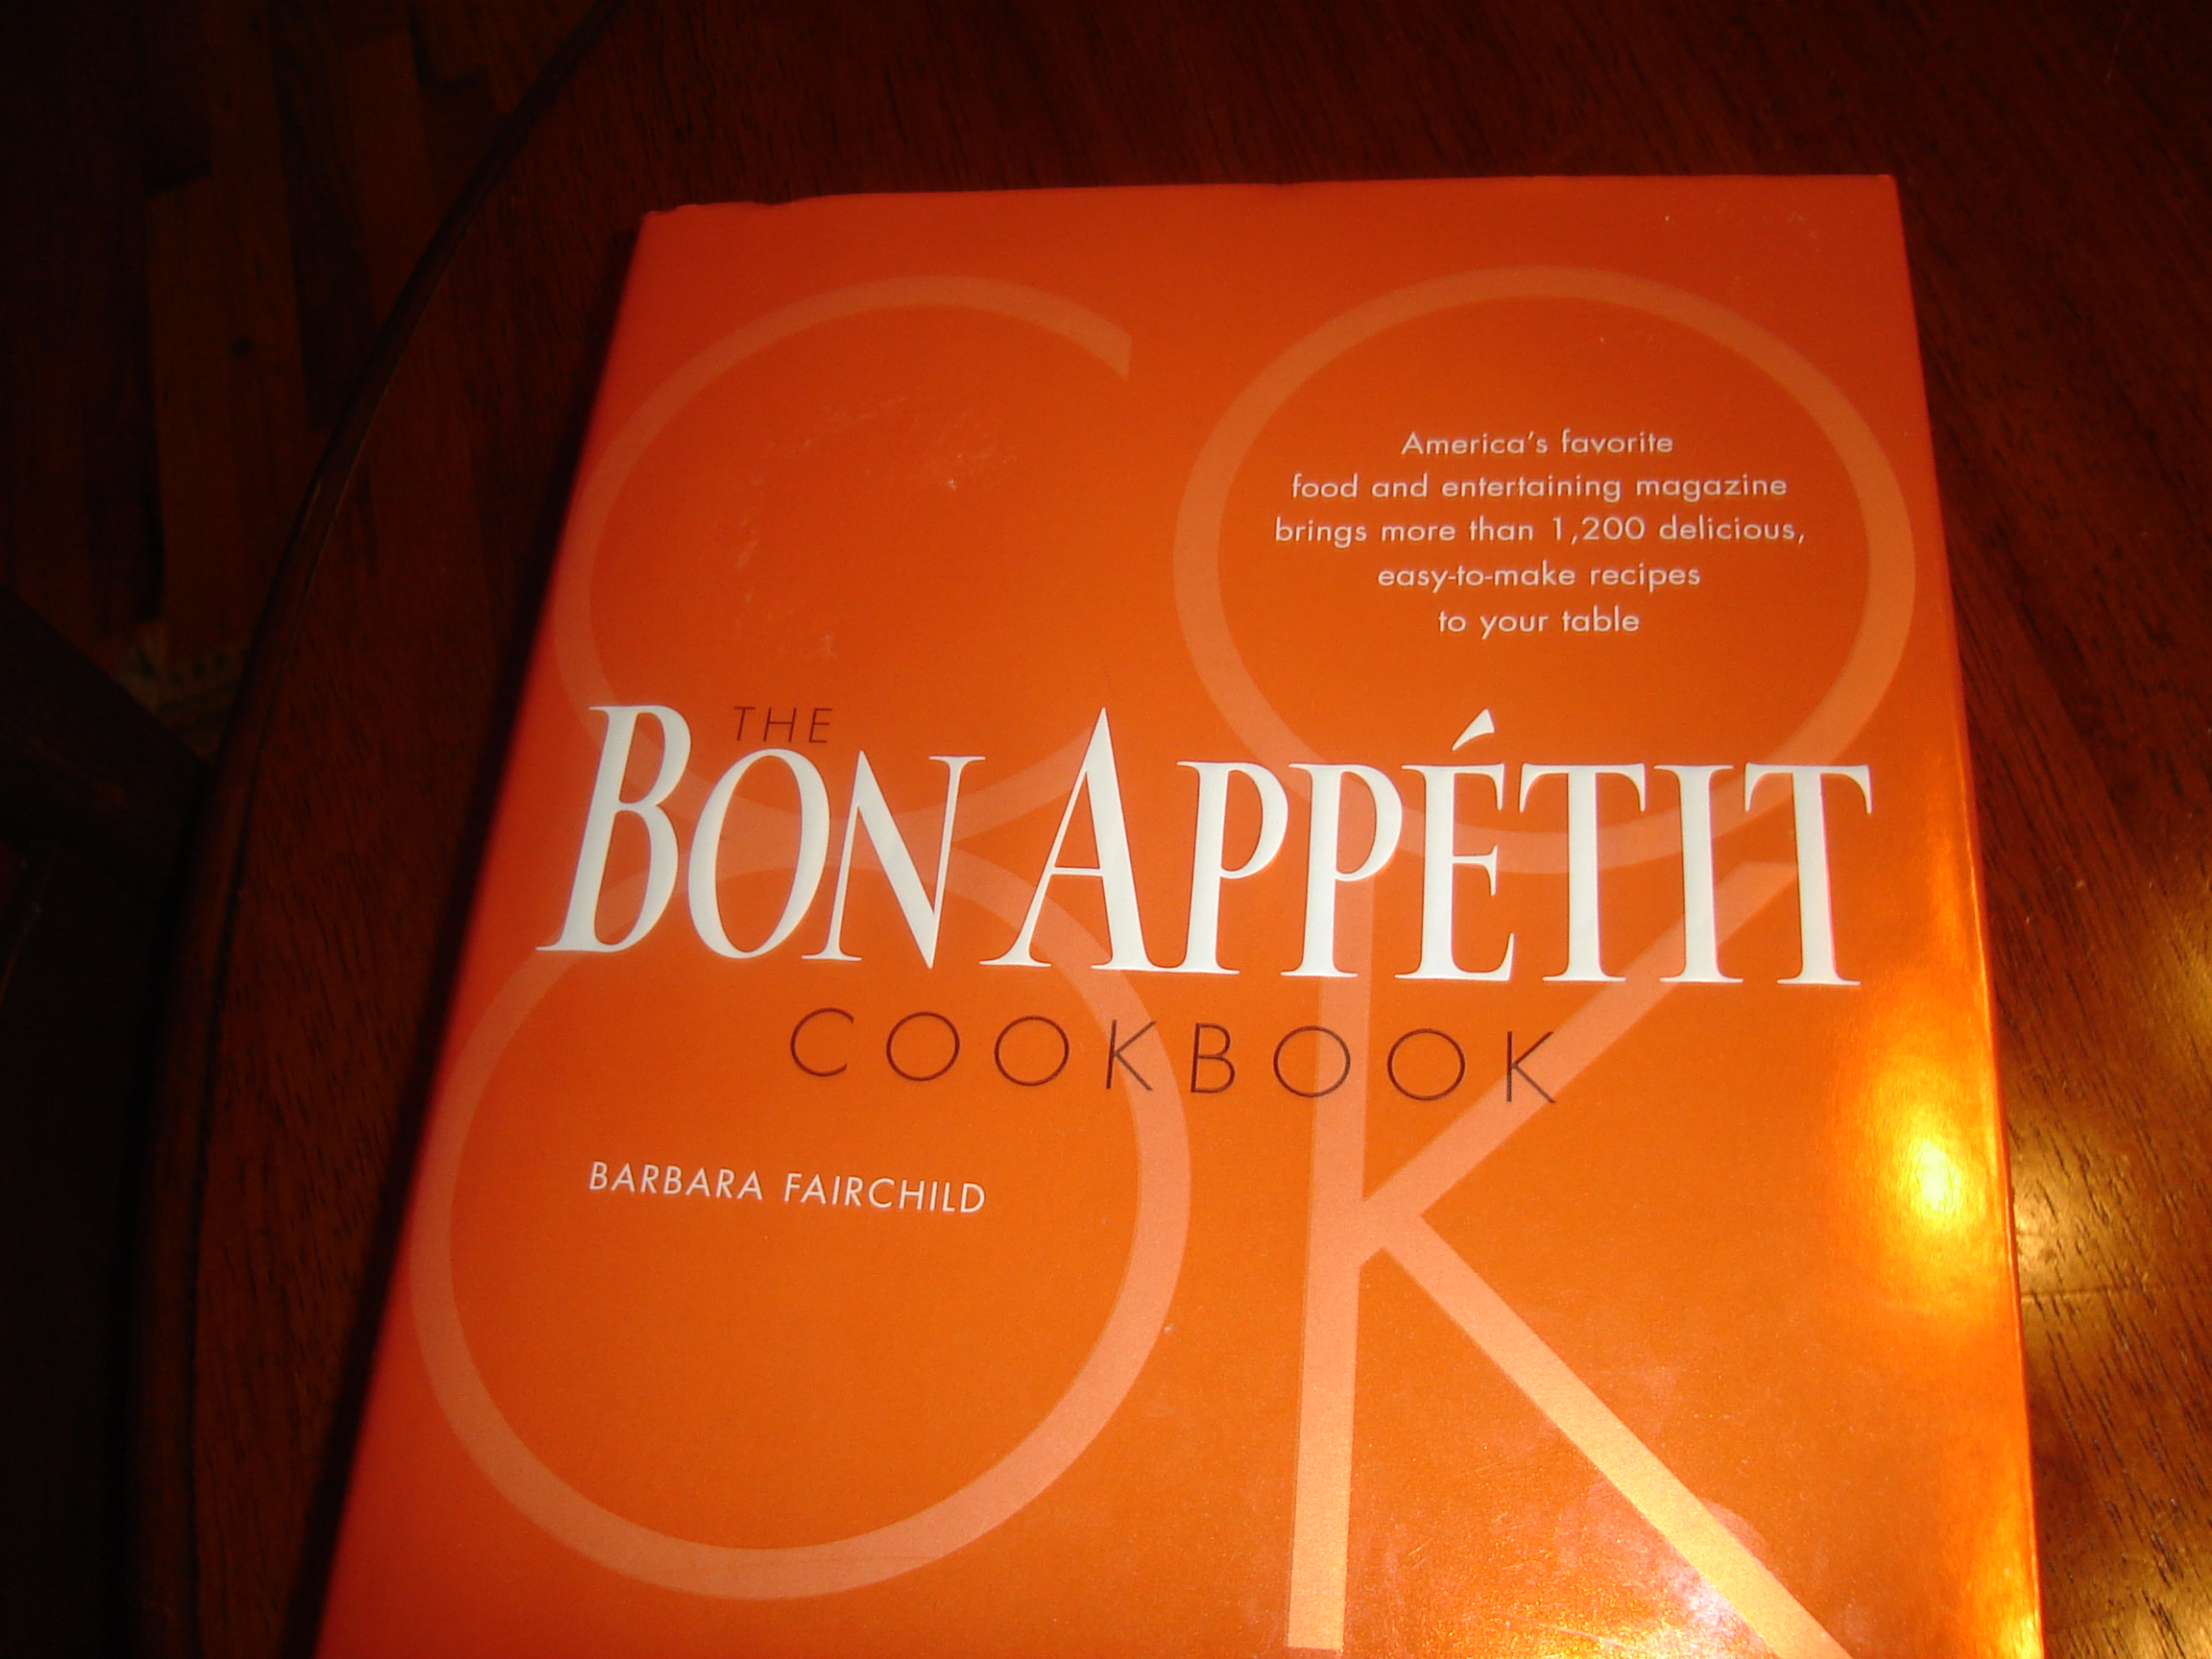 Bon Appetit cookbook